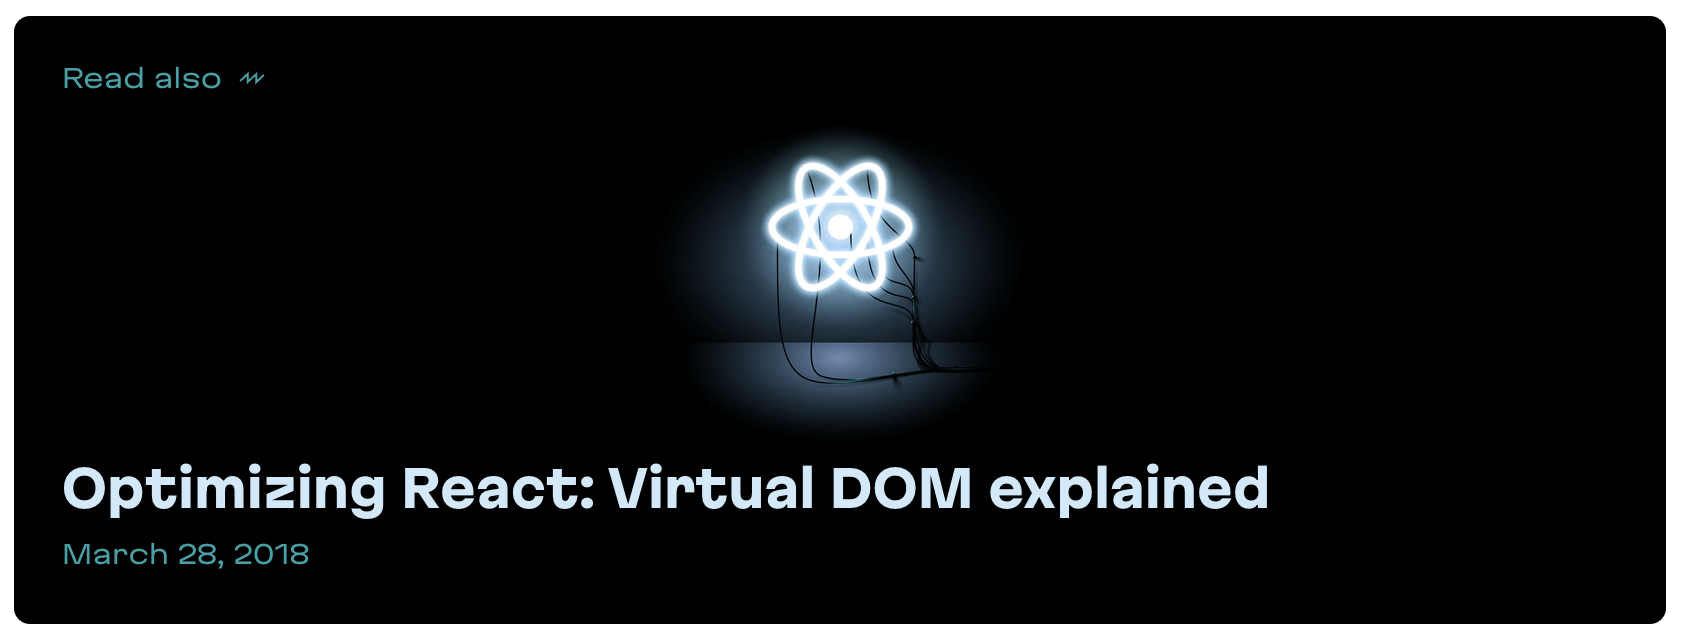 optimizing-react-virtual-dom-explained.png